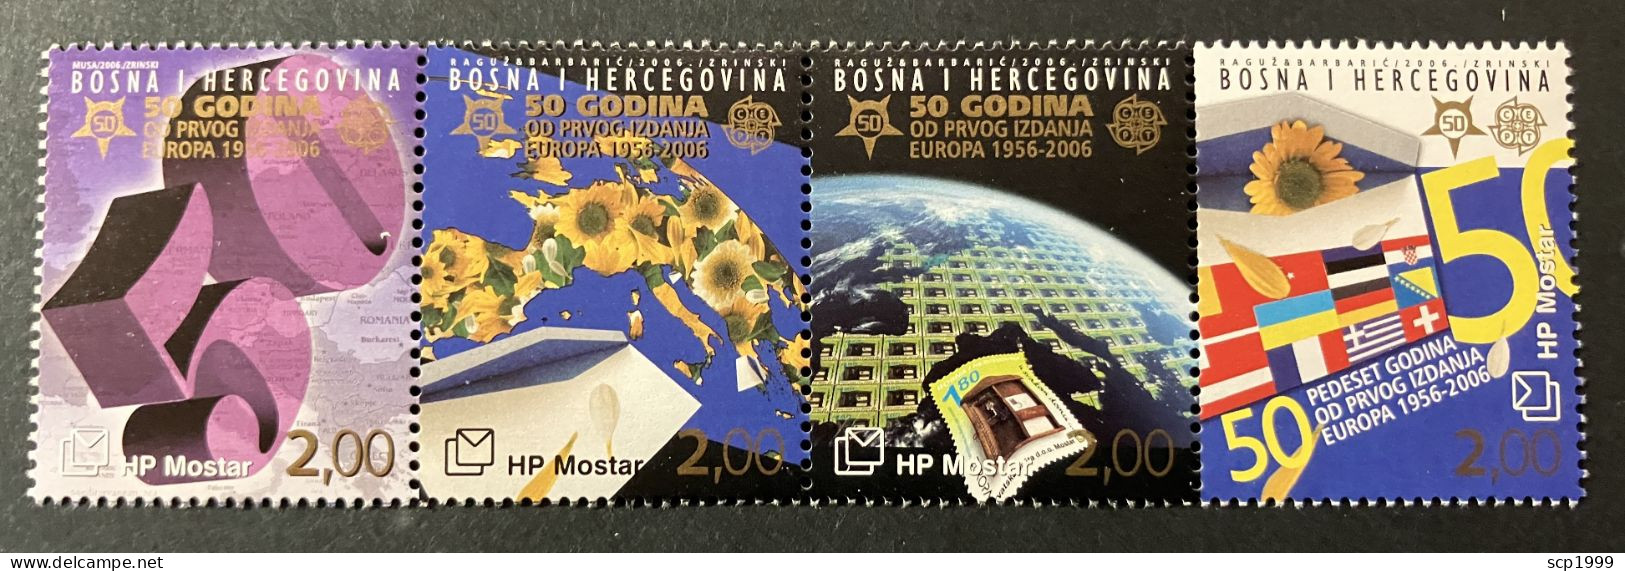 Bosnia And Herzegovina 2006 - Europa 50 Years Stamps Set MNH - Bosnia Herzegovina